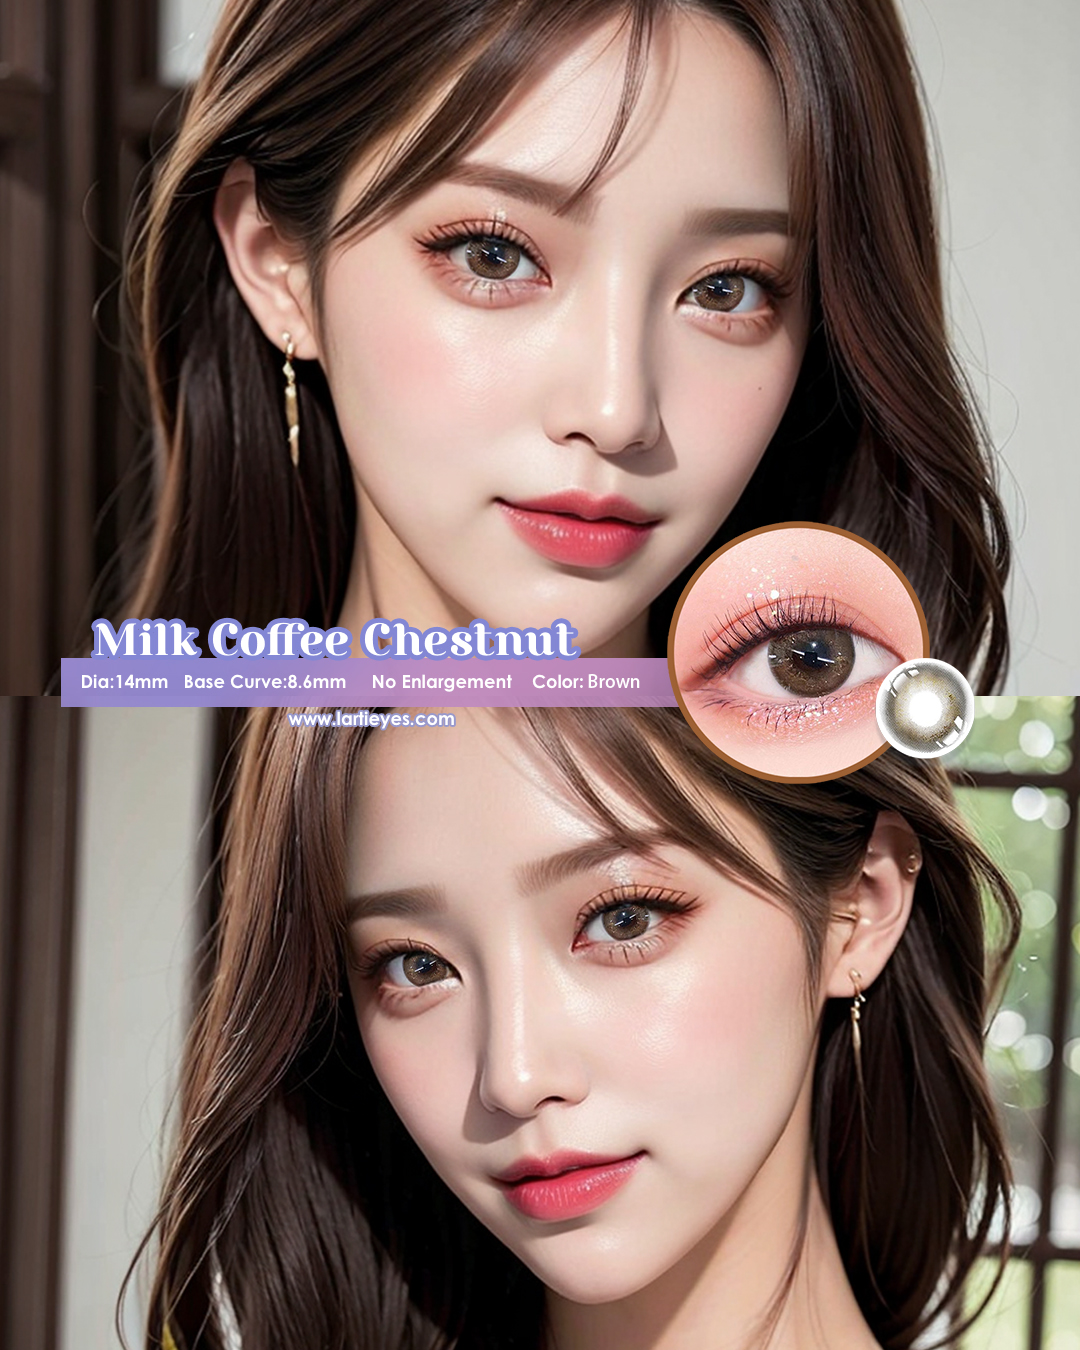 Milk Coffee chestnut model 4jpg